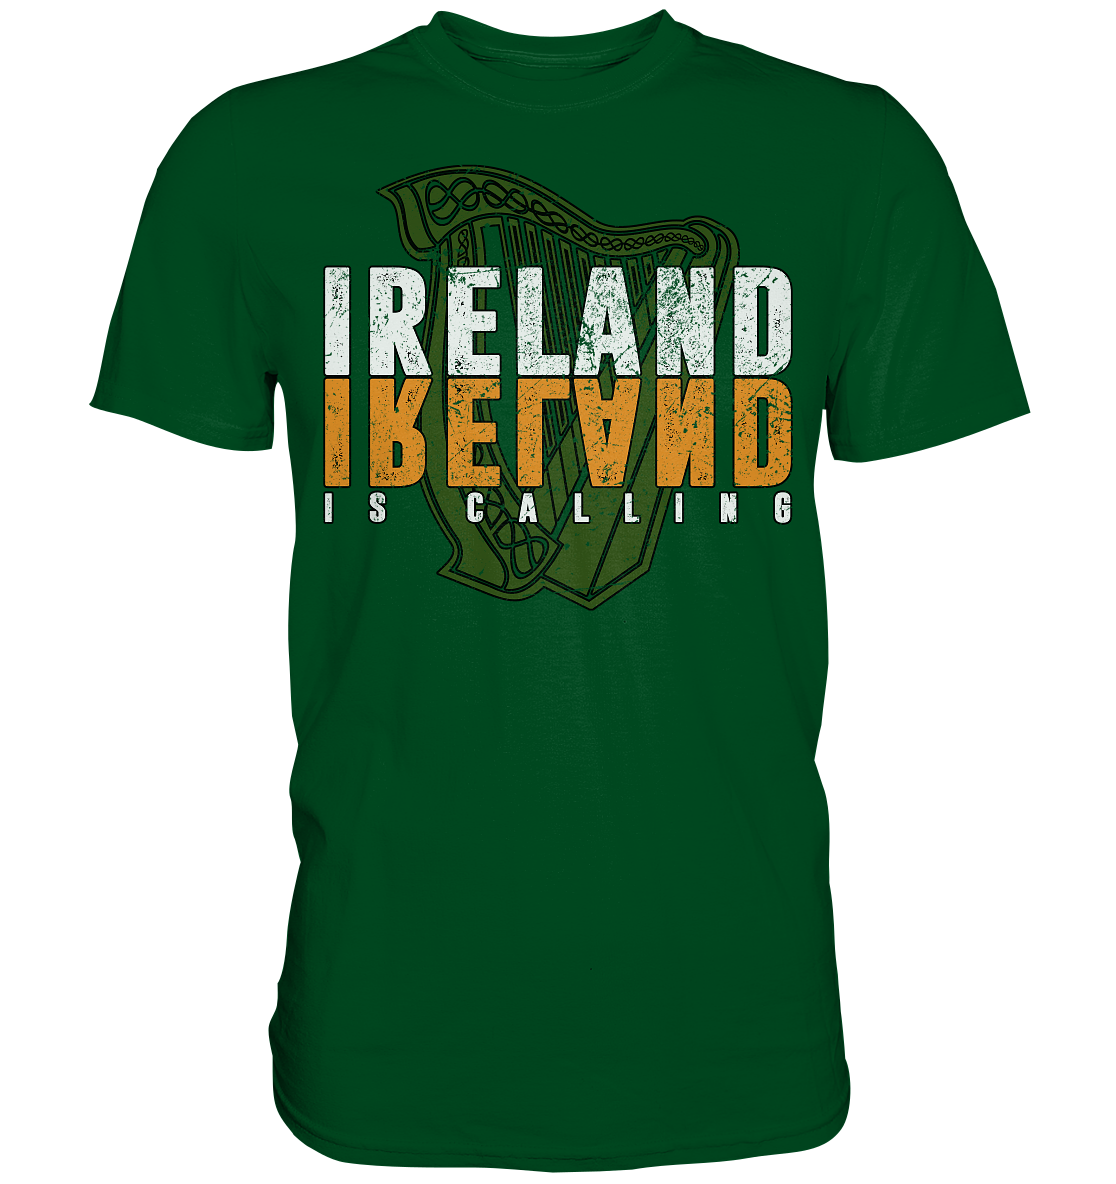 Ireland "Is Calling" - Premium Shirt